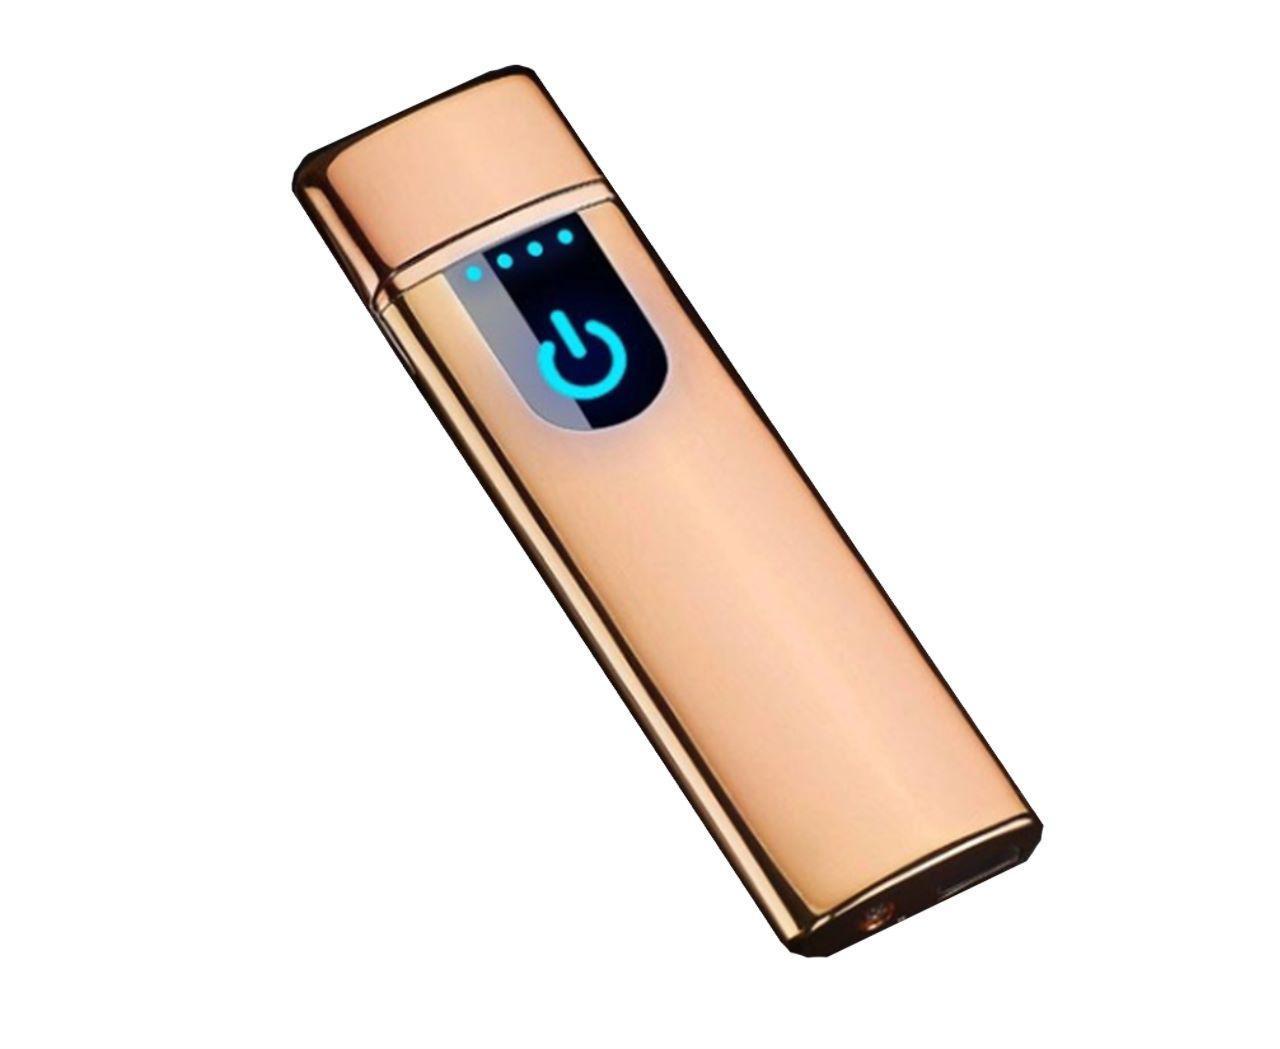 Електроімпульсна запальничка SUNROZ TH-752 портативна електронна USB запальничка Золотистий